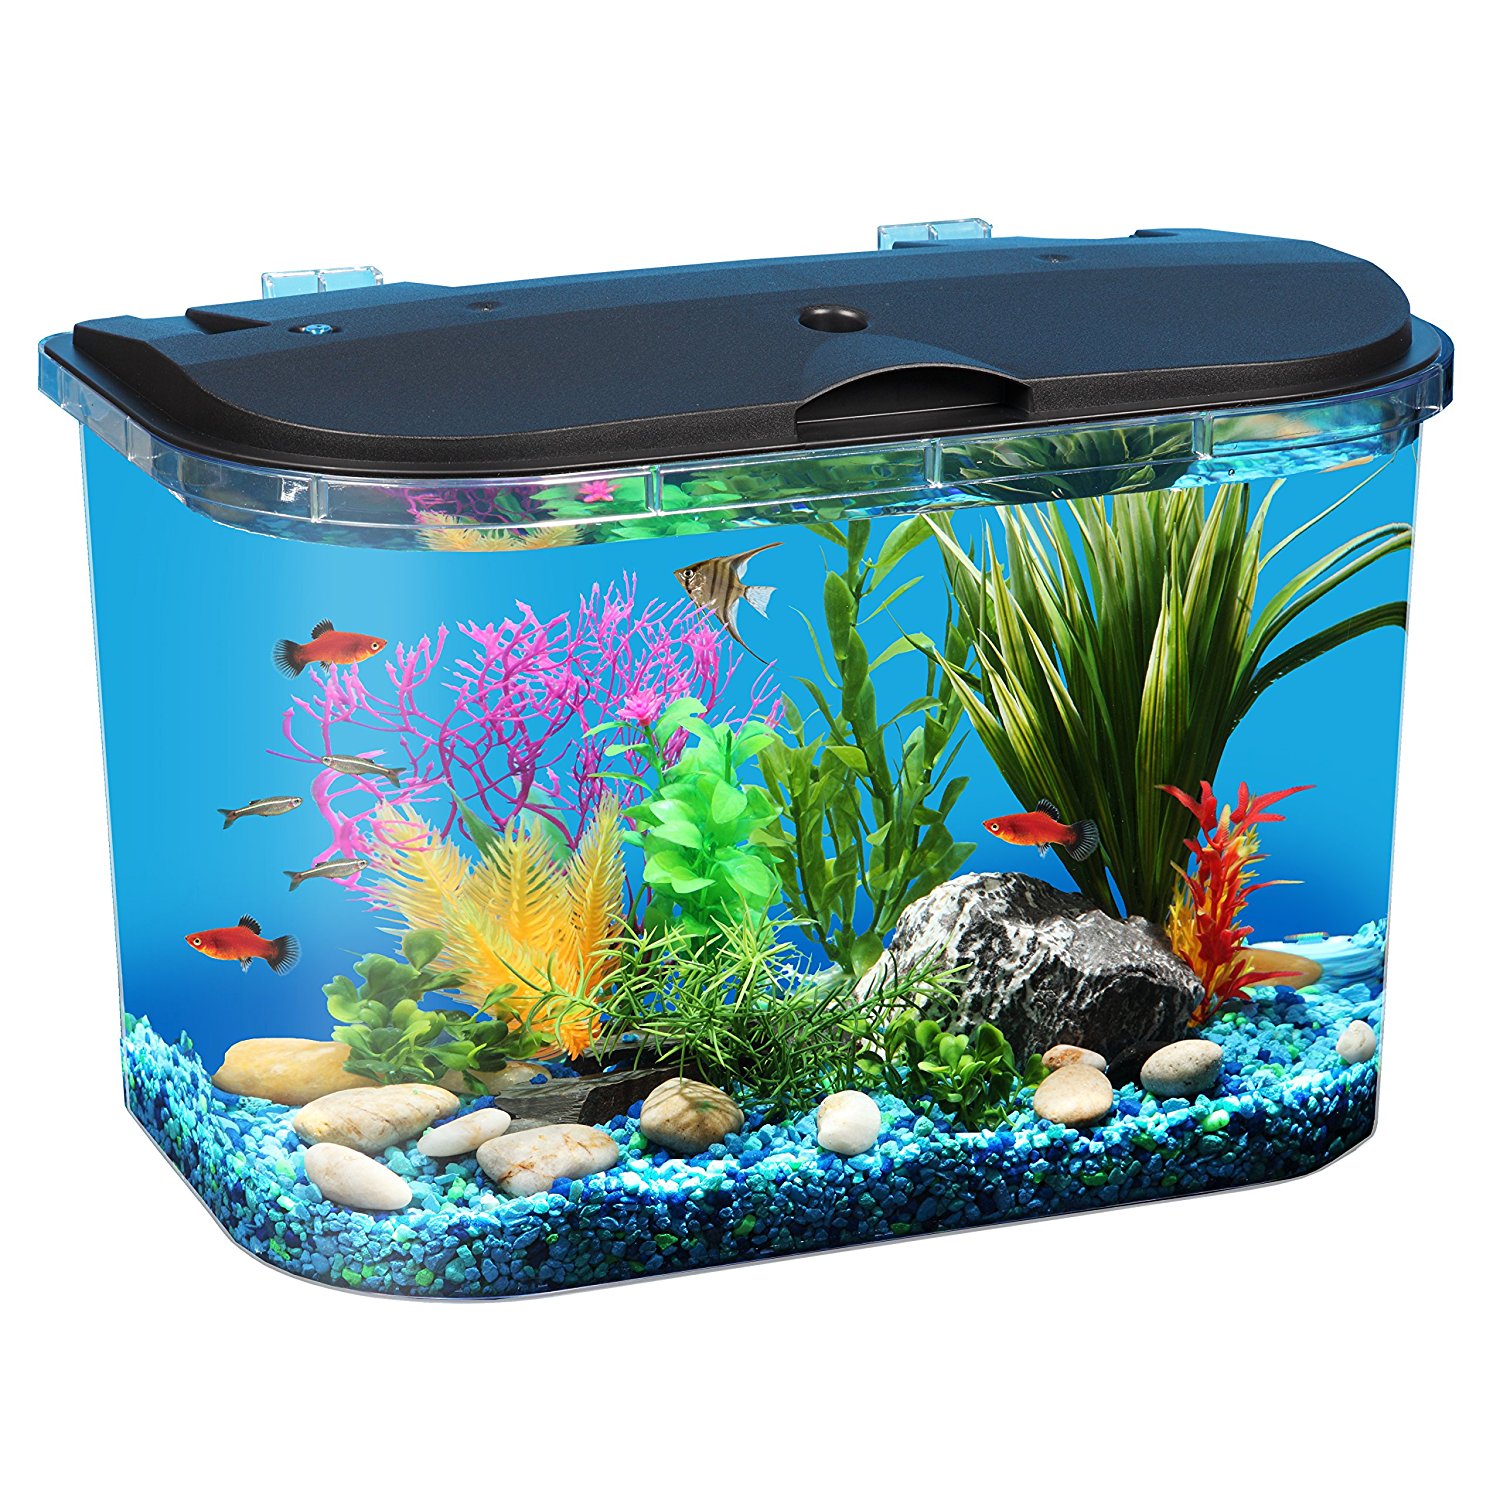 Amazon.com: Koller Products Panaview 5-Gallon Aquarium Kit with LED ...